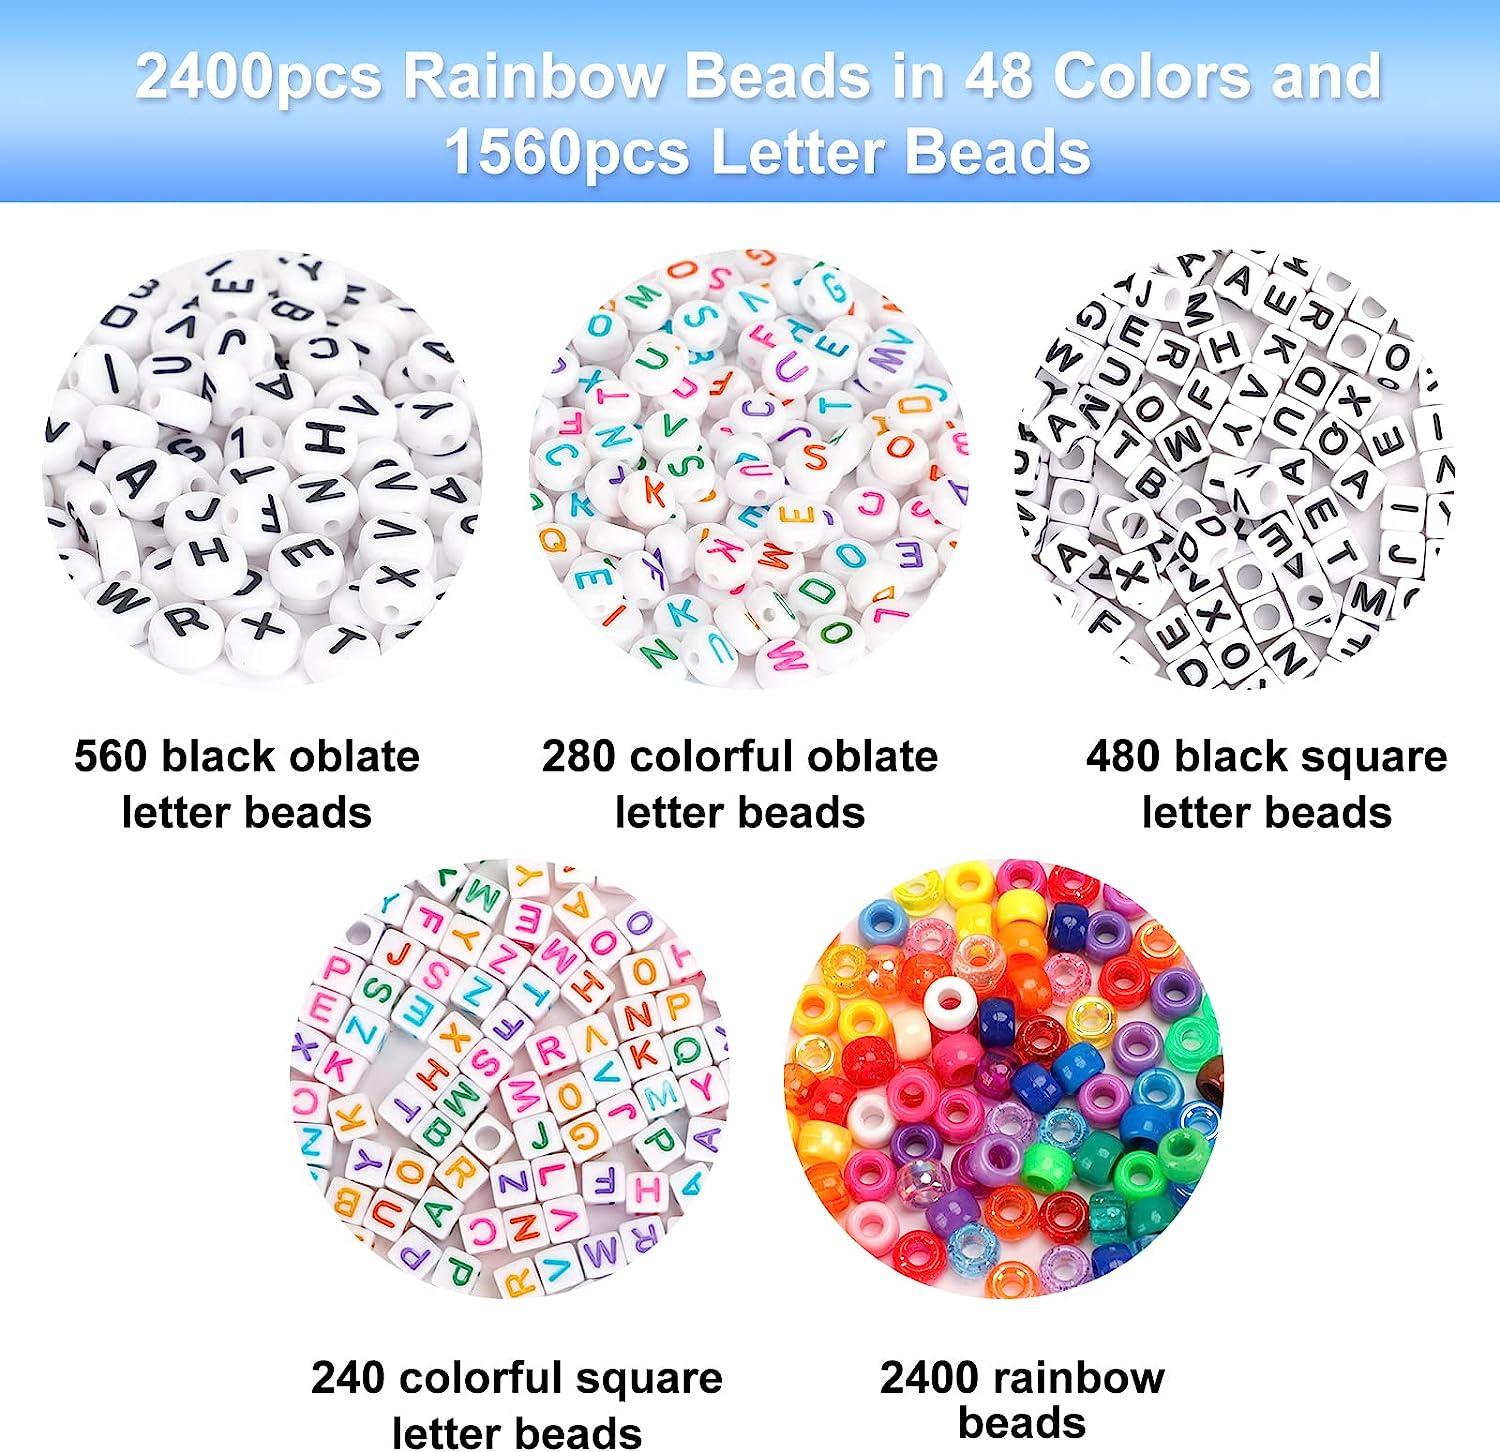 QUEFE 3250pcs Pony Beads Set, Kandi Beads 2400pcs Rainbow Beads in